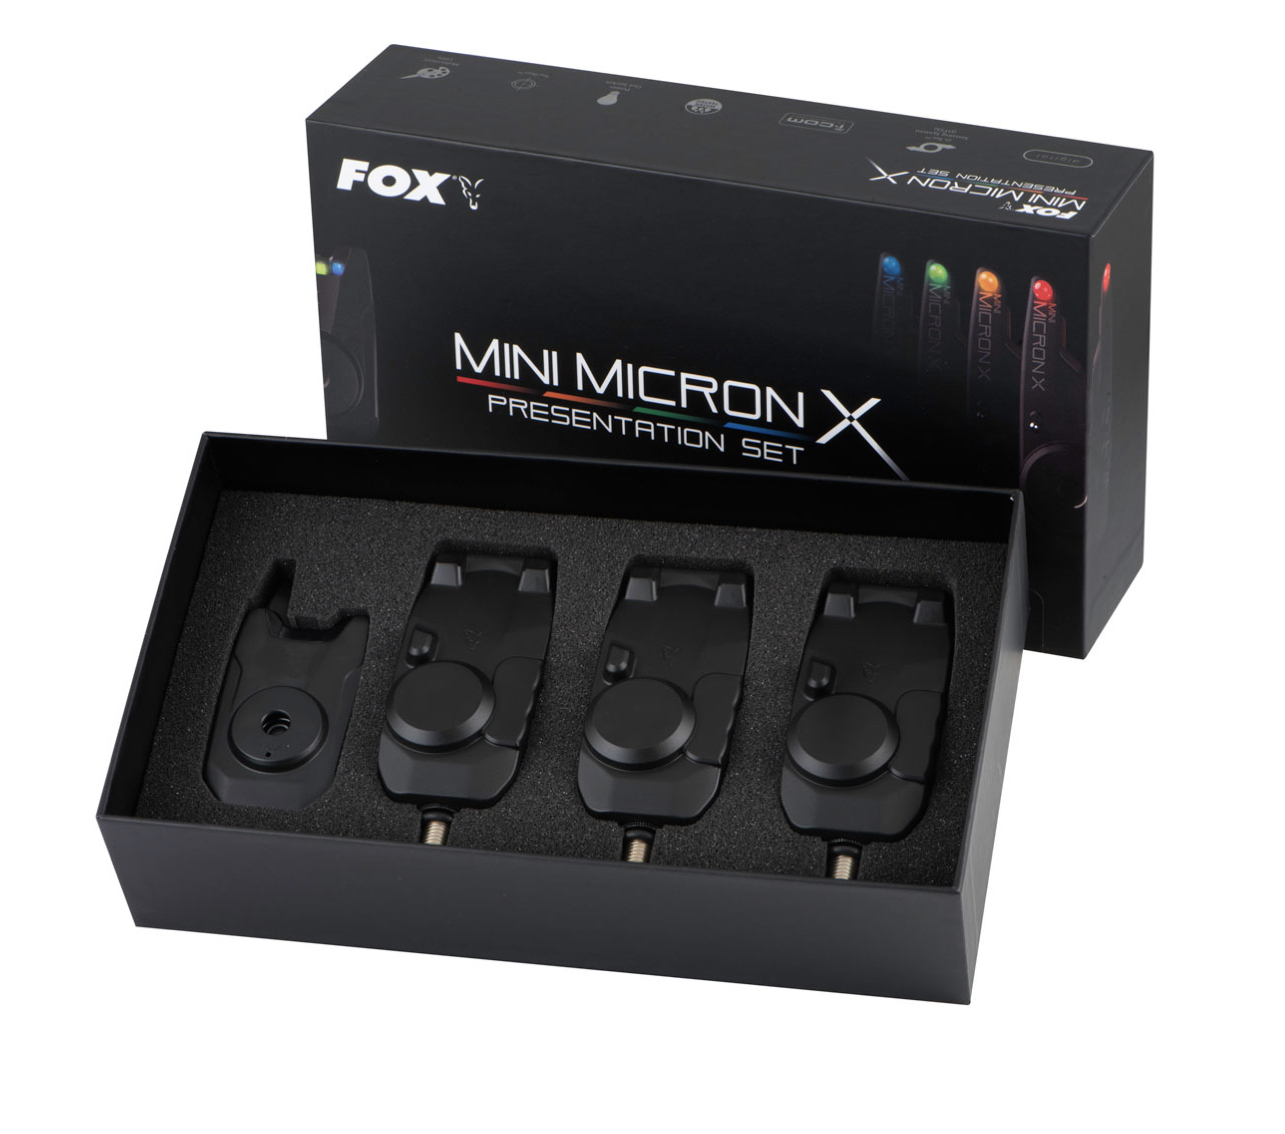 Fox Mini Micron X Presentation Sets